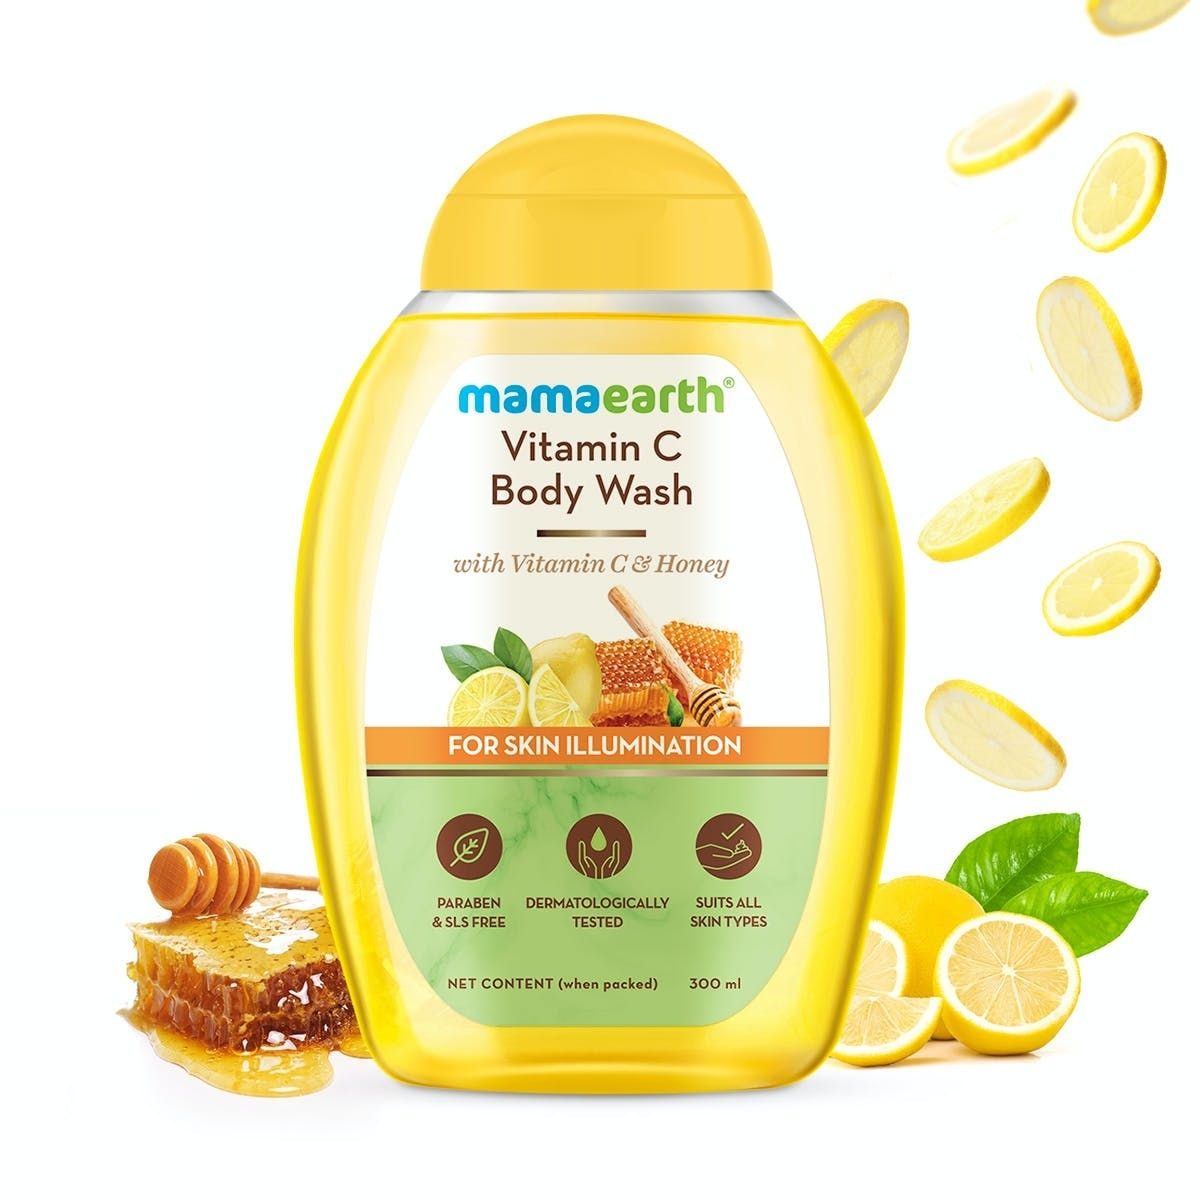 Mamaearth Vitamin C Body Wash With Vitamin C And Honey For Skin Illumination - 300ml